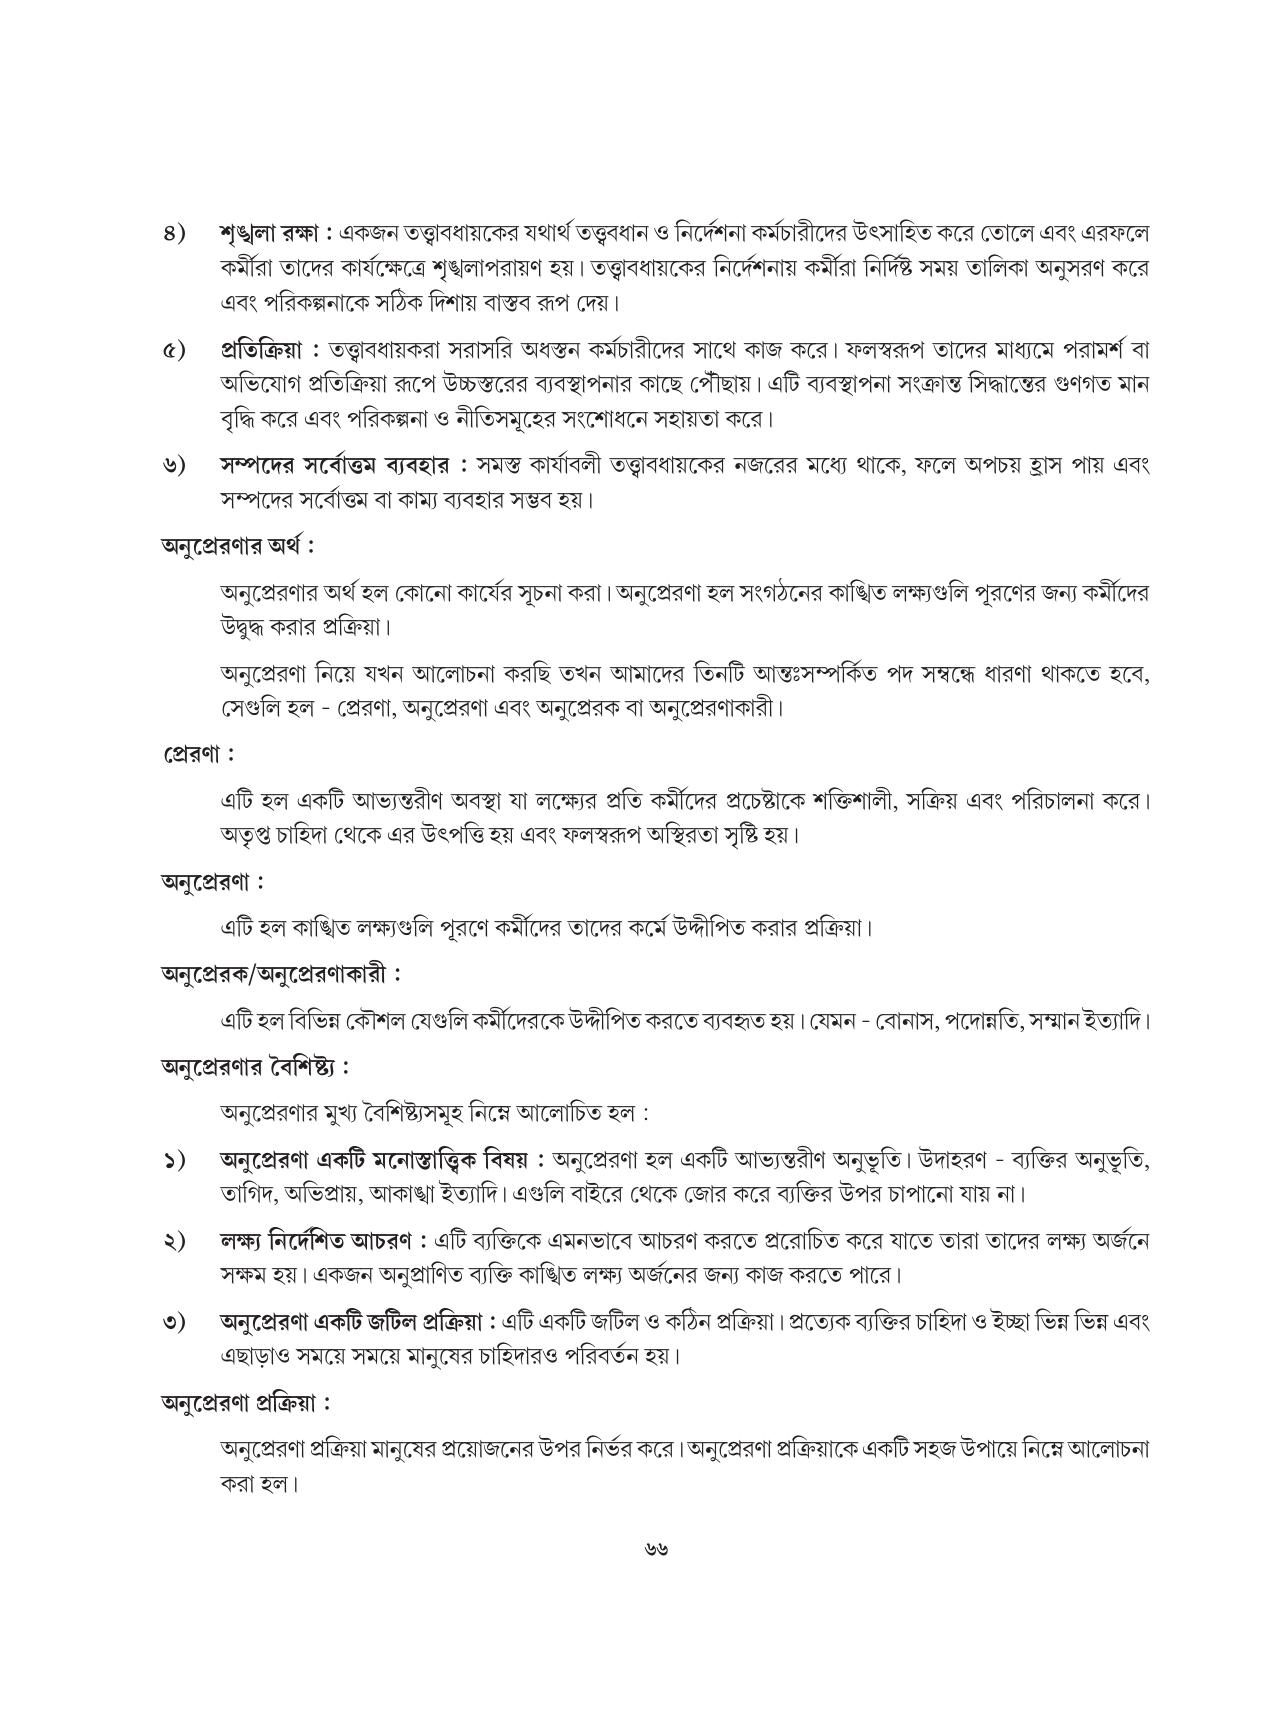 Tripura Board Class 12 Karbari Shastra Bengali Version Workbooks - Page 66